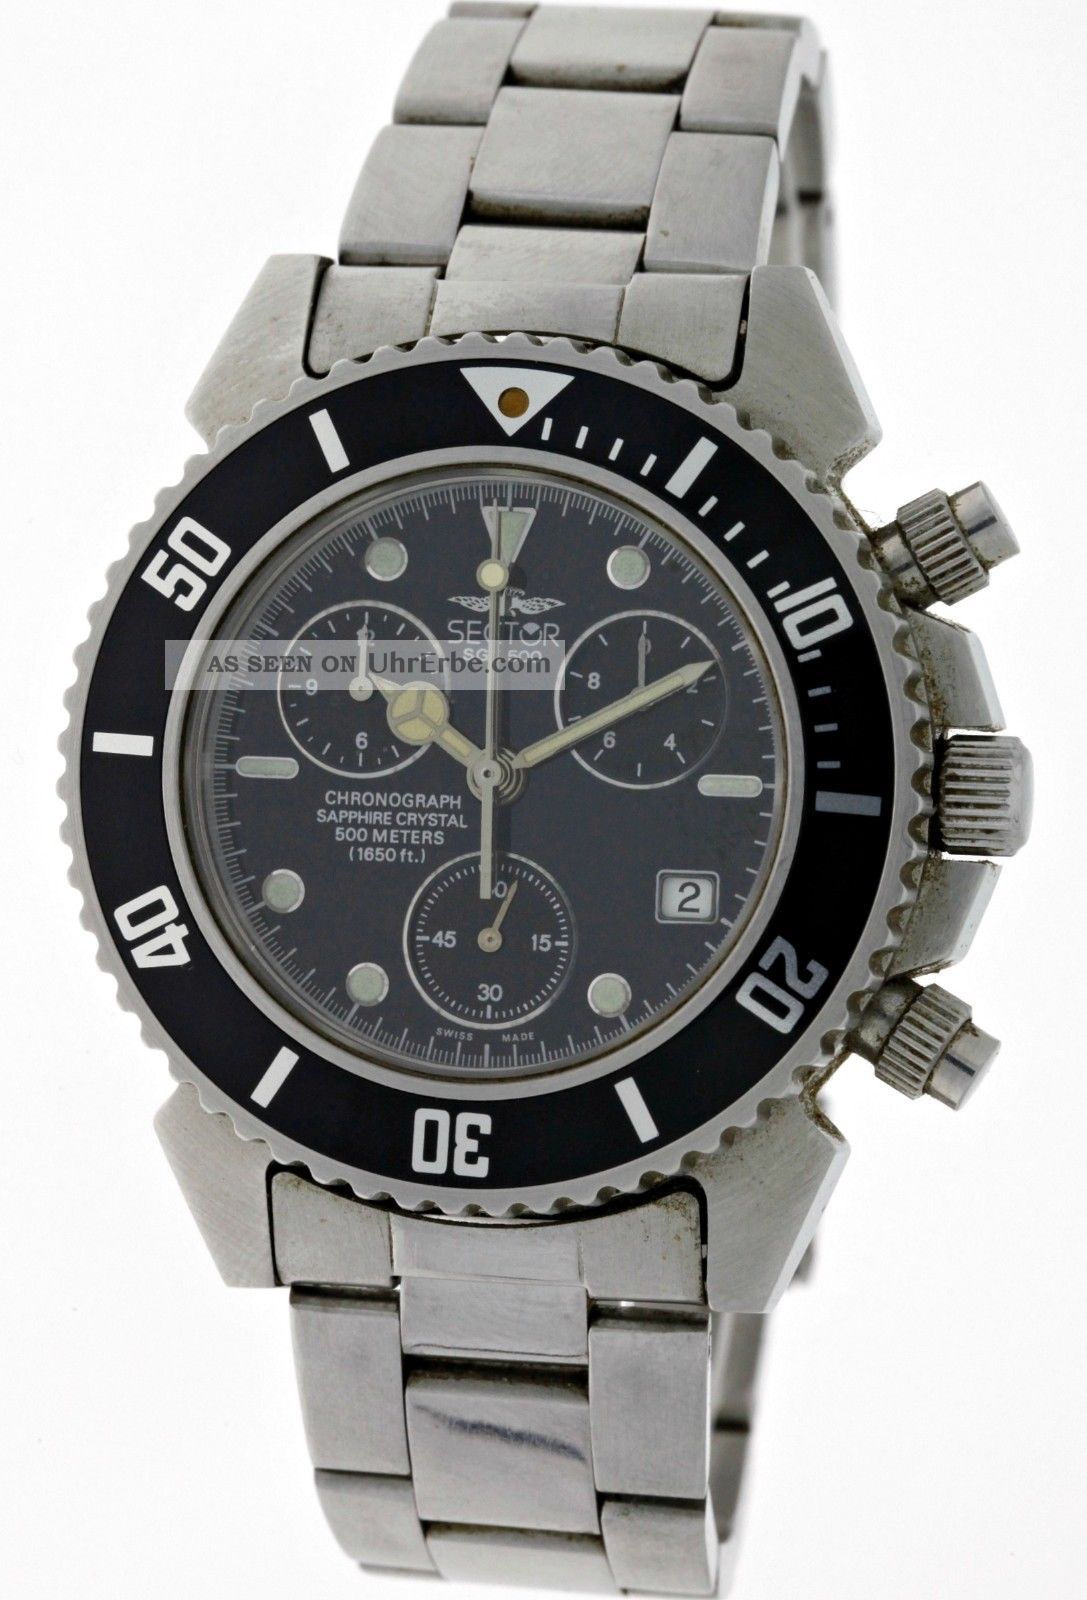 Sector Sge 500 Diver Chronograph 1650 Feet Edelstahl Saphirglas Papiere Aus 1996 Armbanduhren Bild